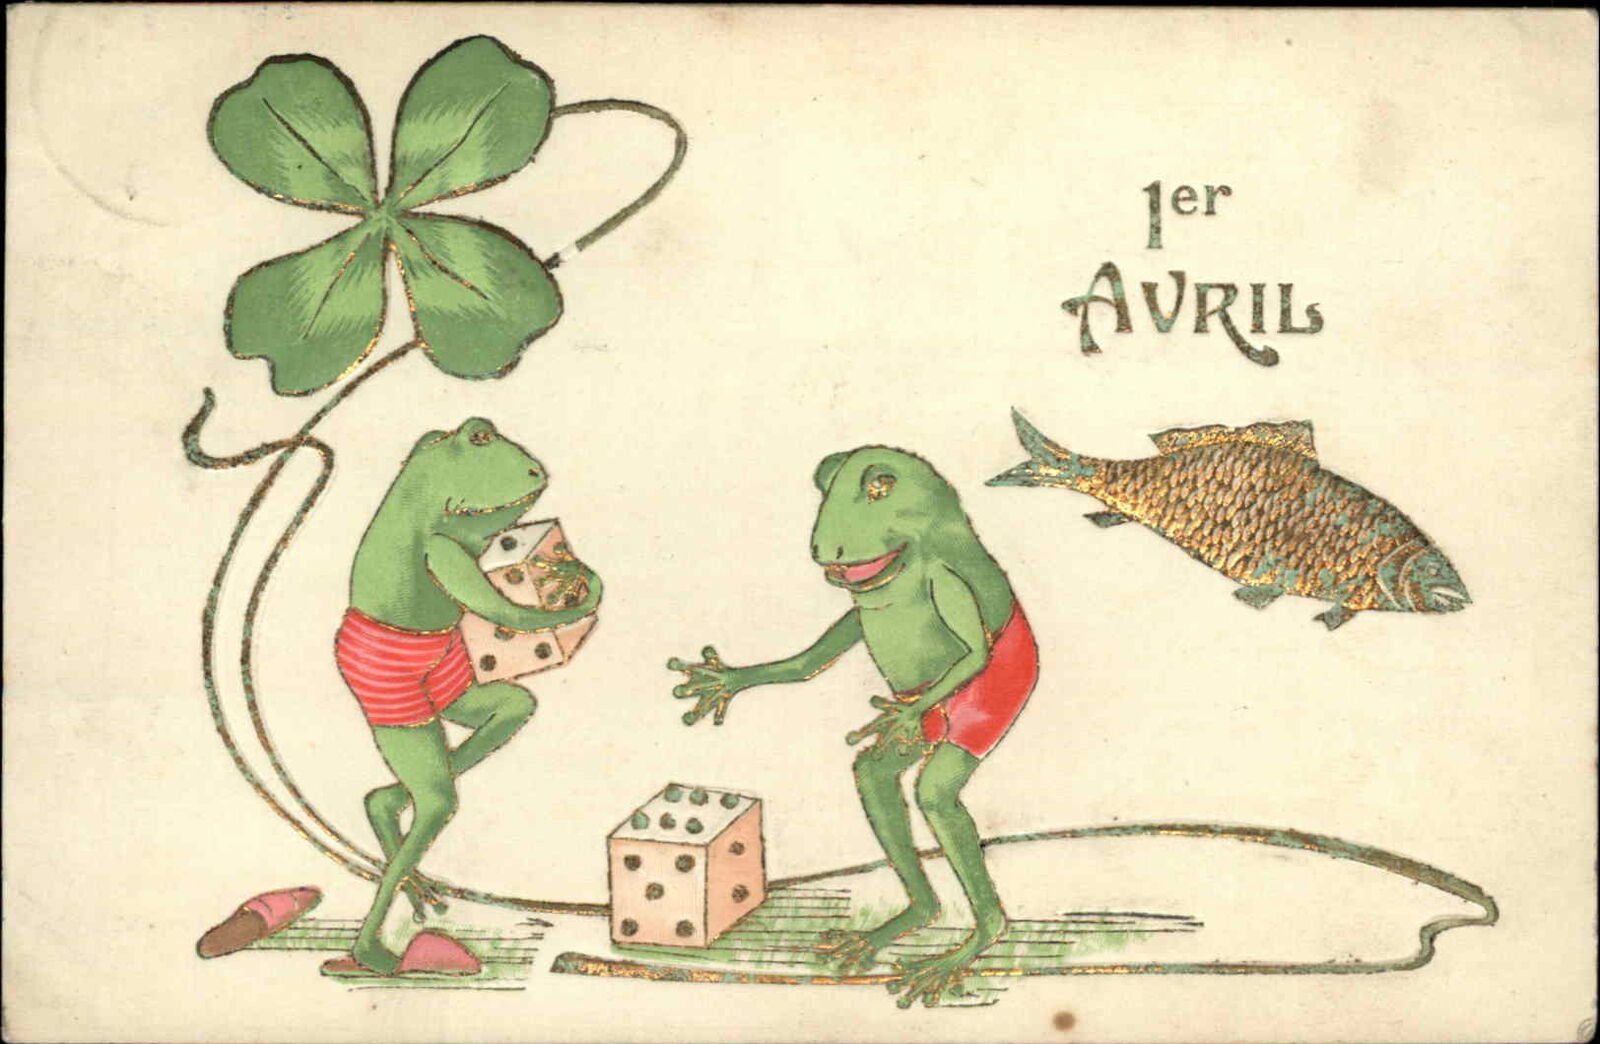 Premier Avril April Fool\'s Day Frogs Gambling Dice c1910 Vintage Postcard